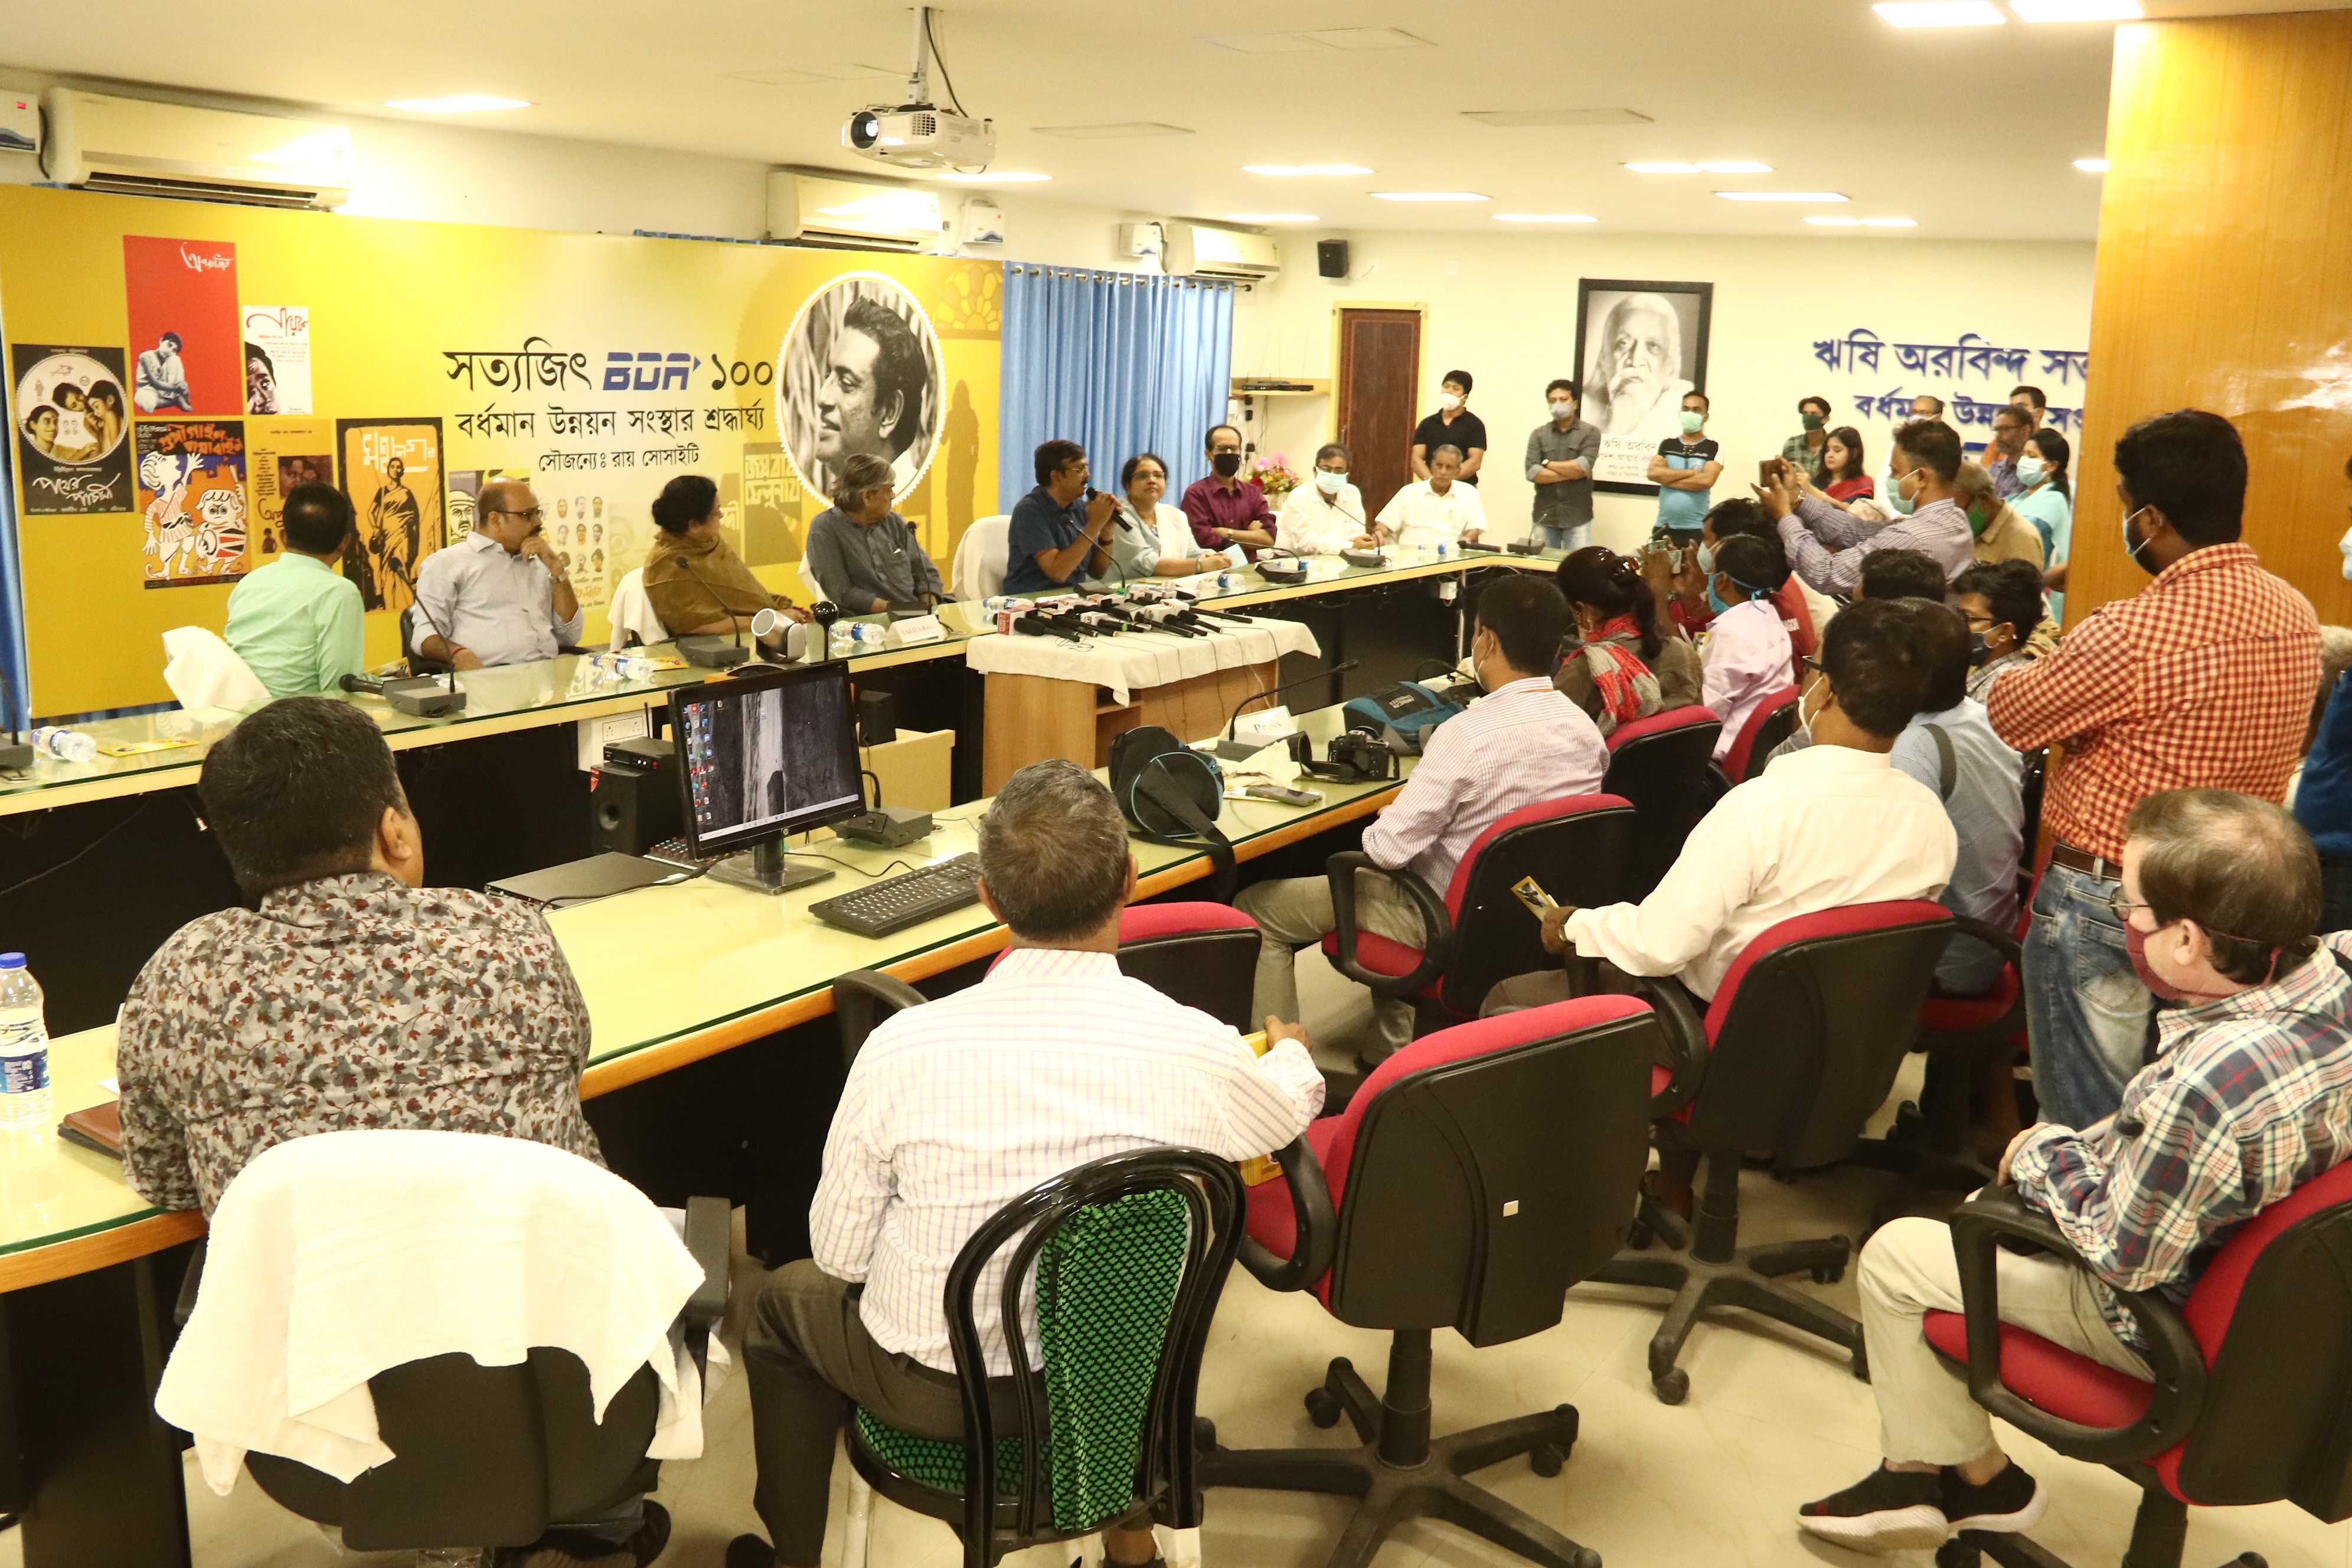 BDA's venture to celebrate the occasion of the birth centenary of Shri Satyajit Ray4